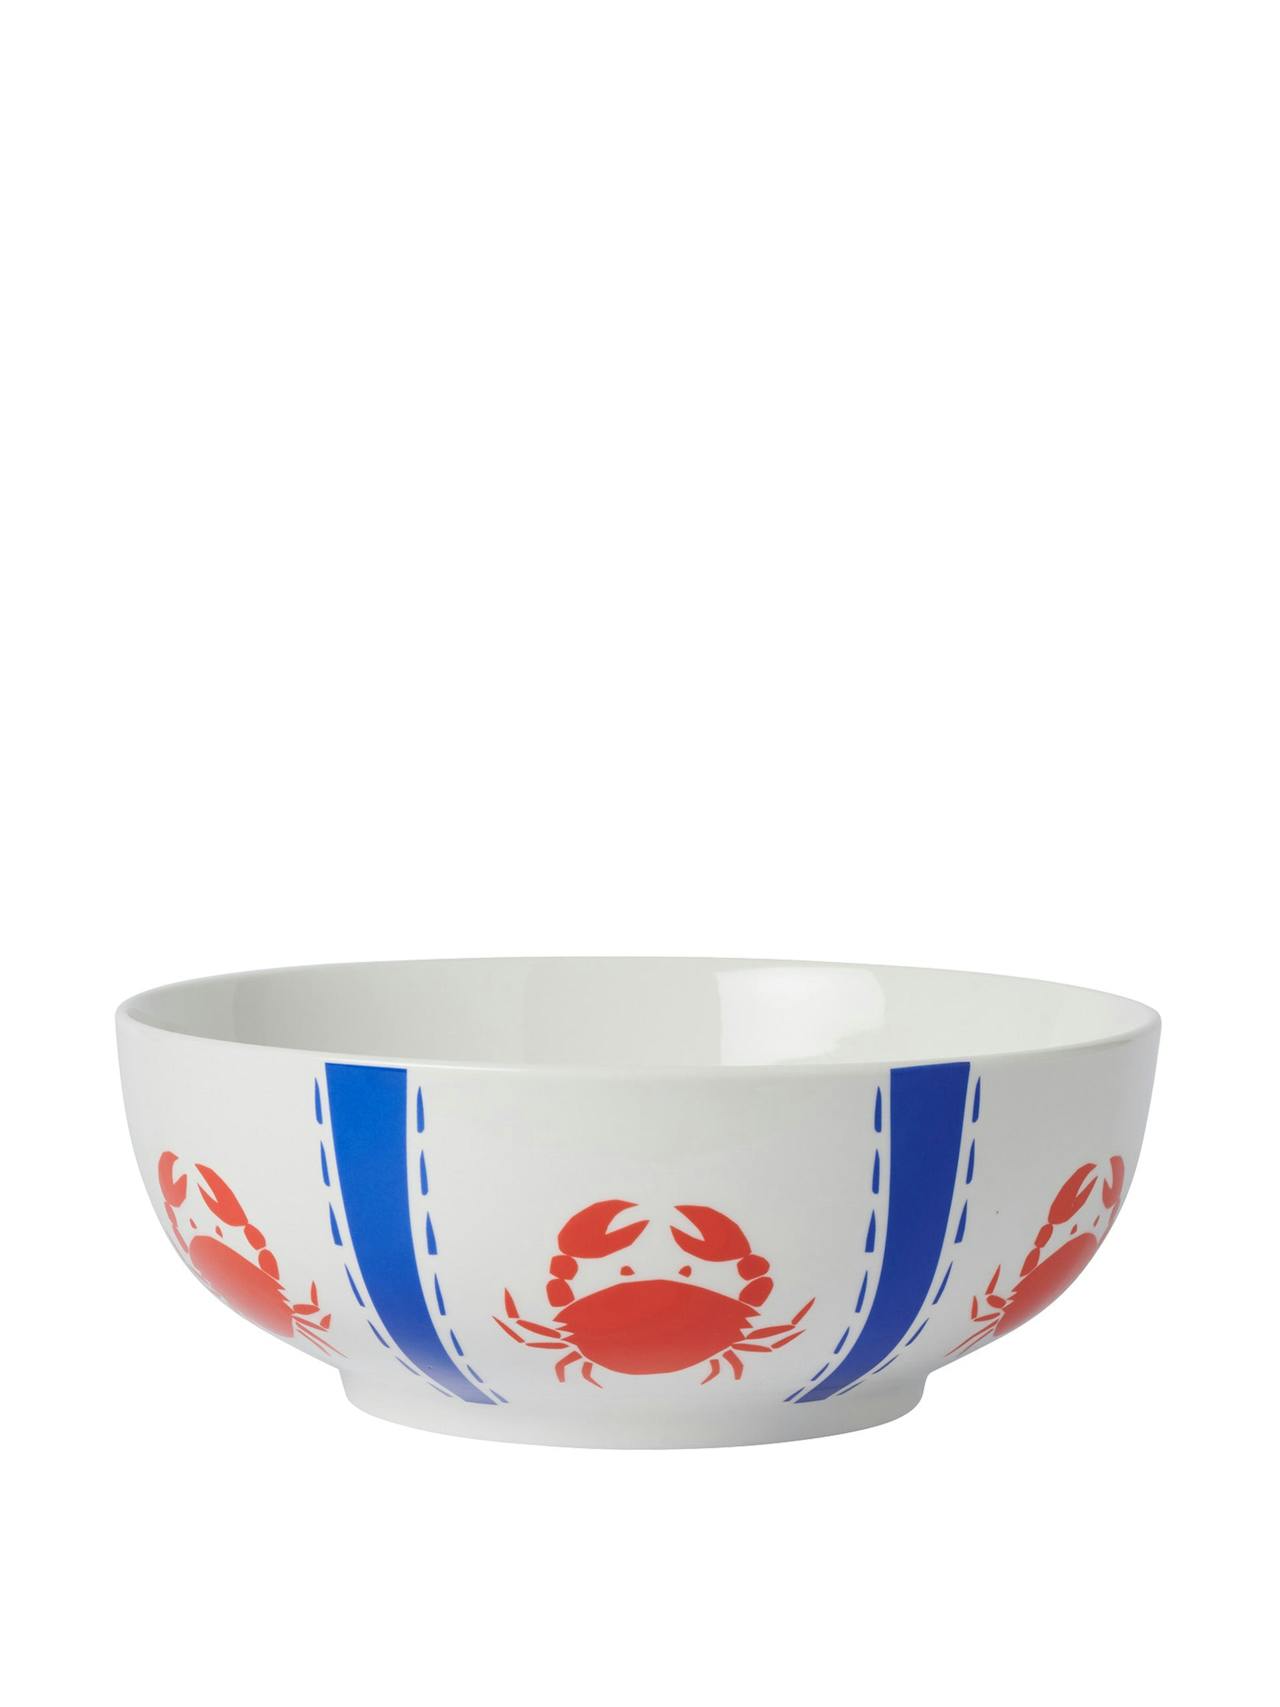 Crab serving bowl